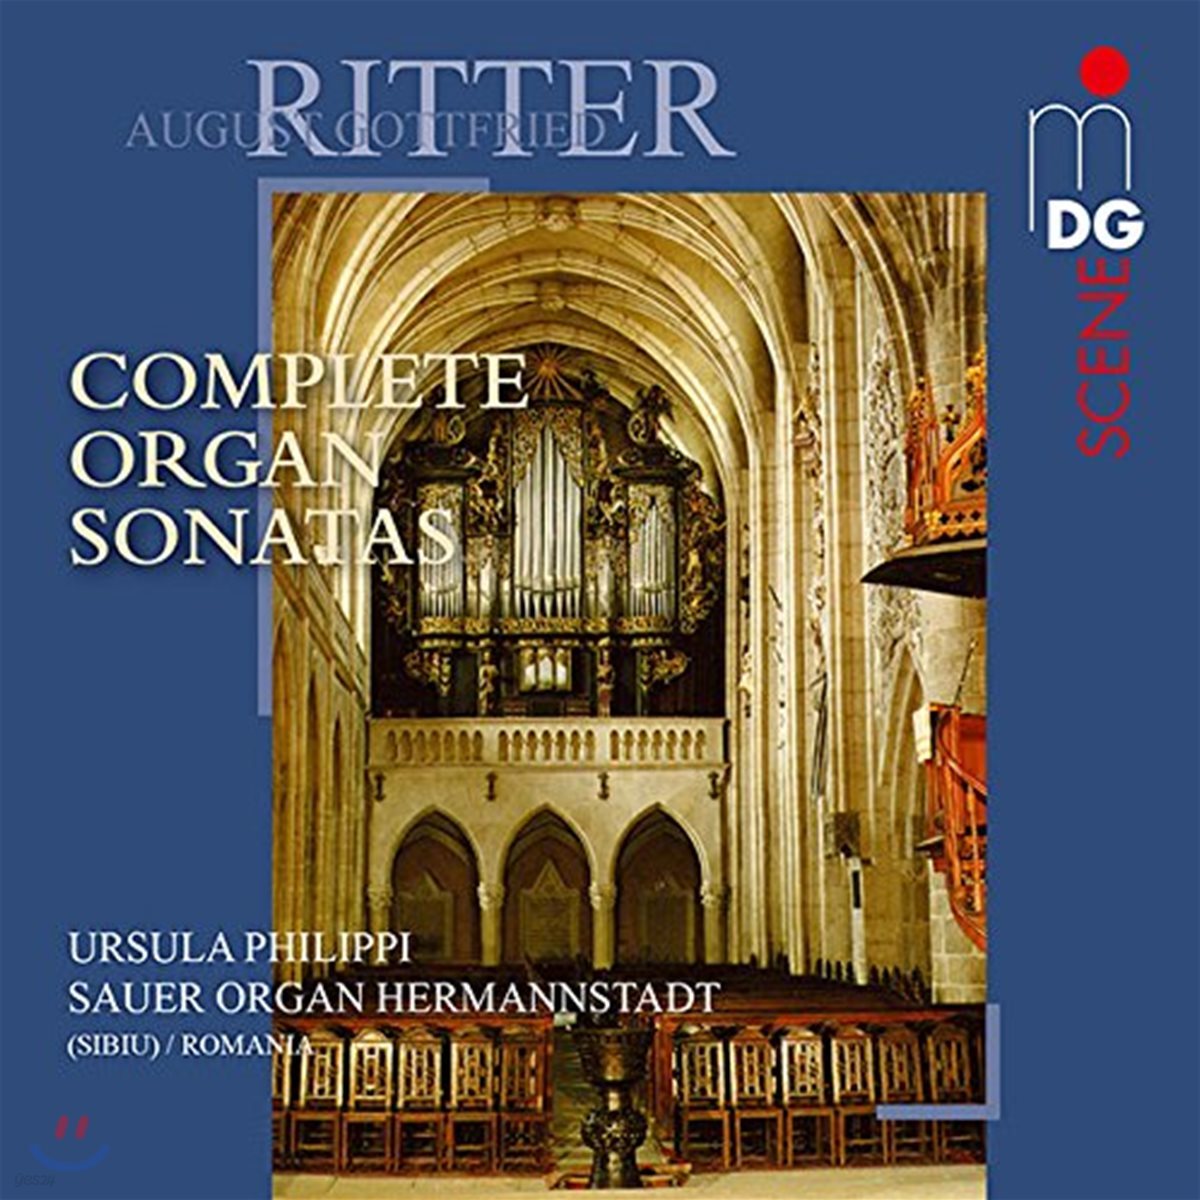 Ursula Philippi 어거스트 고트프리드 리터: 오르간 소나타 전곡 Op. 11, 19, 23, 31 (August Gottfried Ritter: Complete Organ Sonatas)